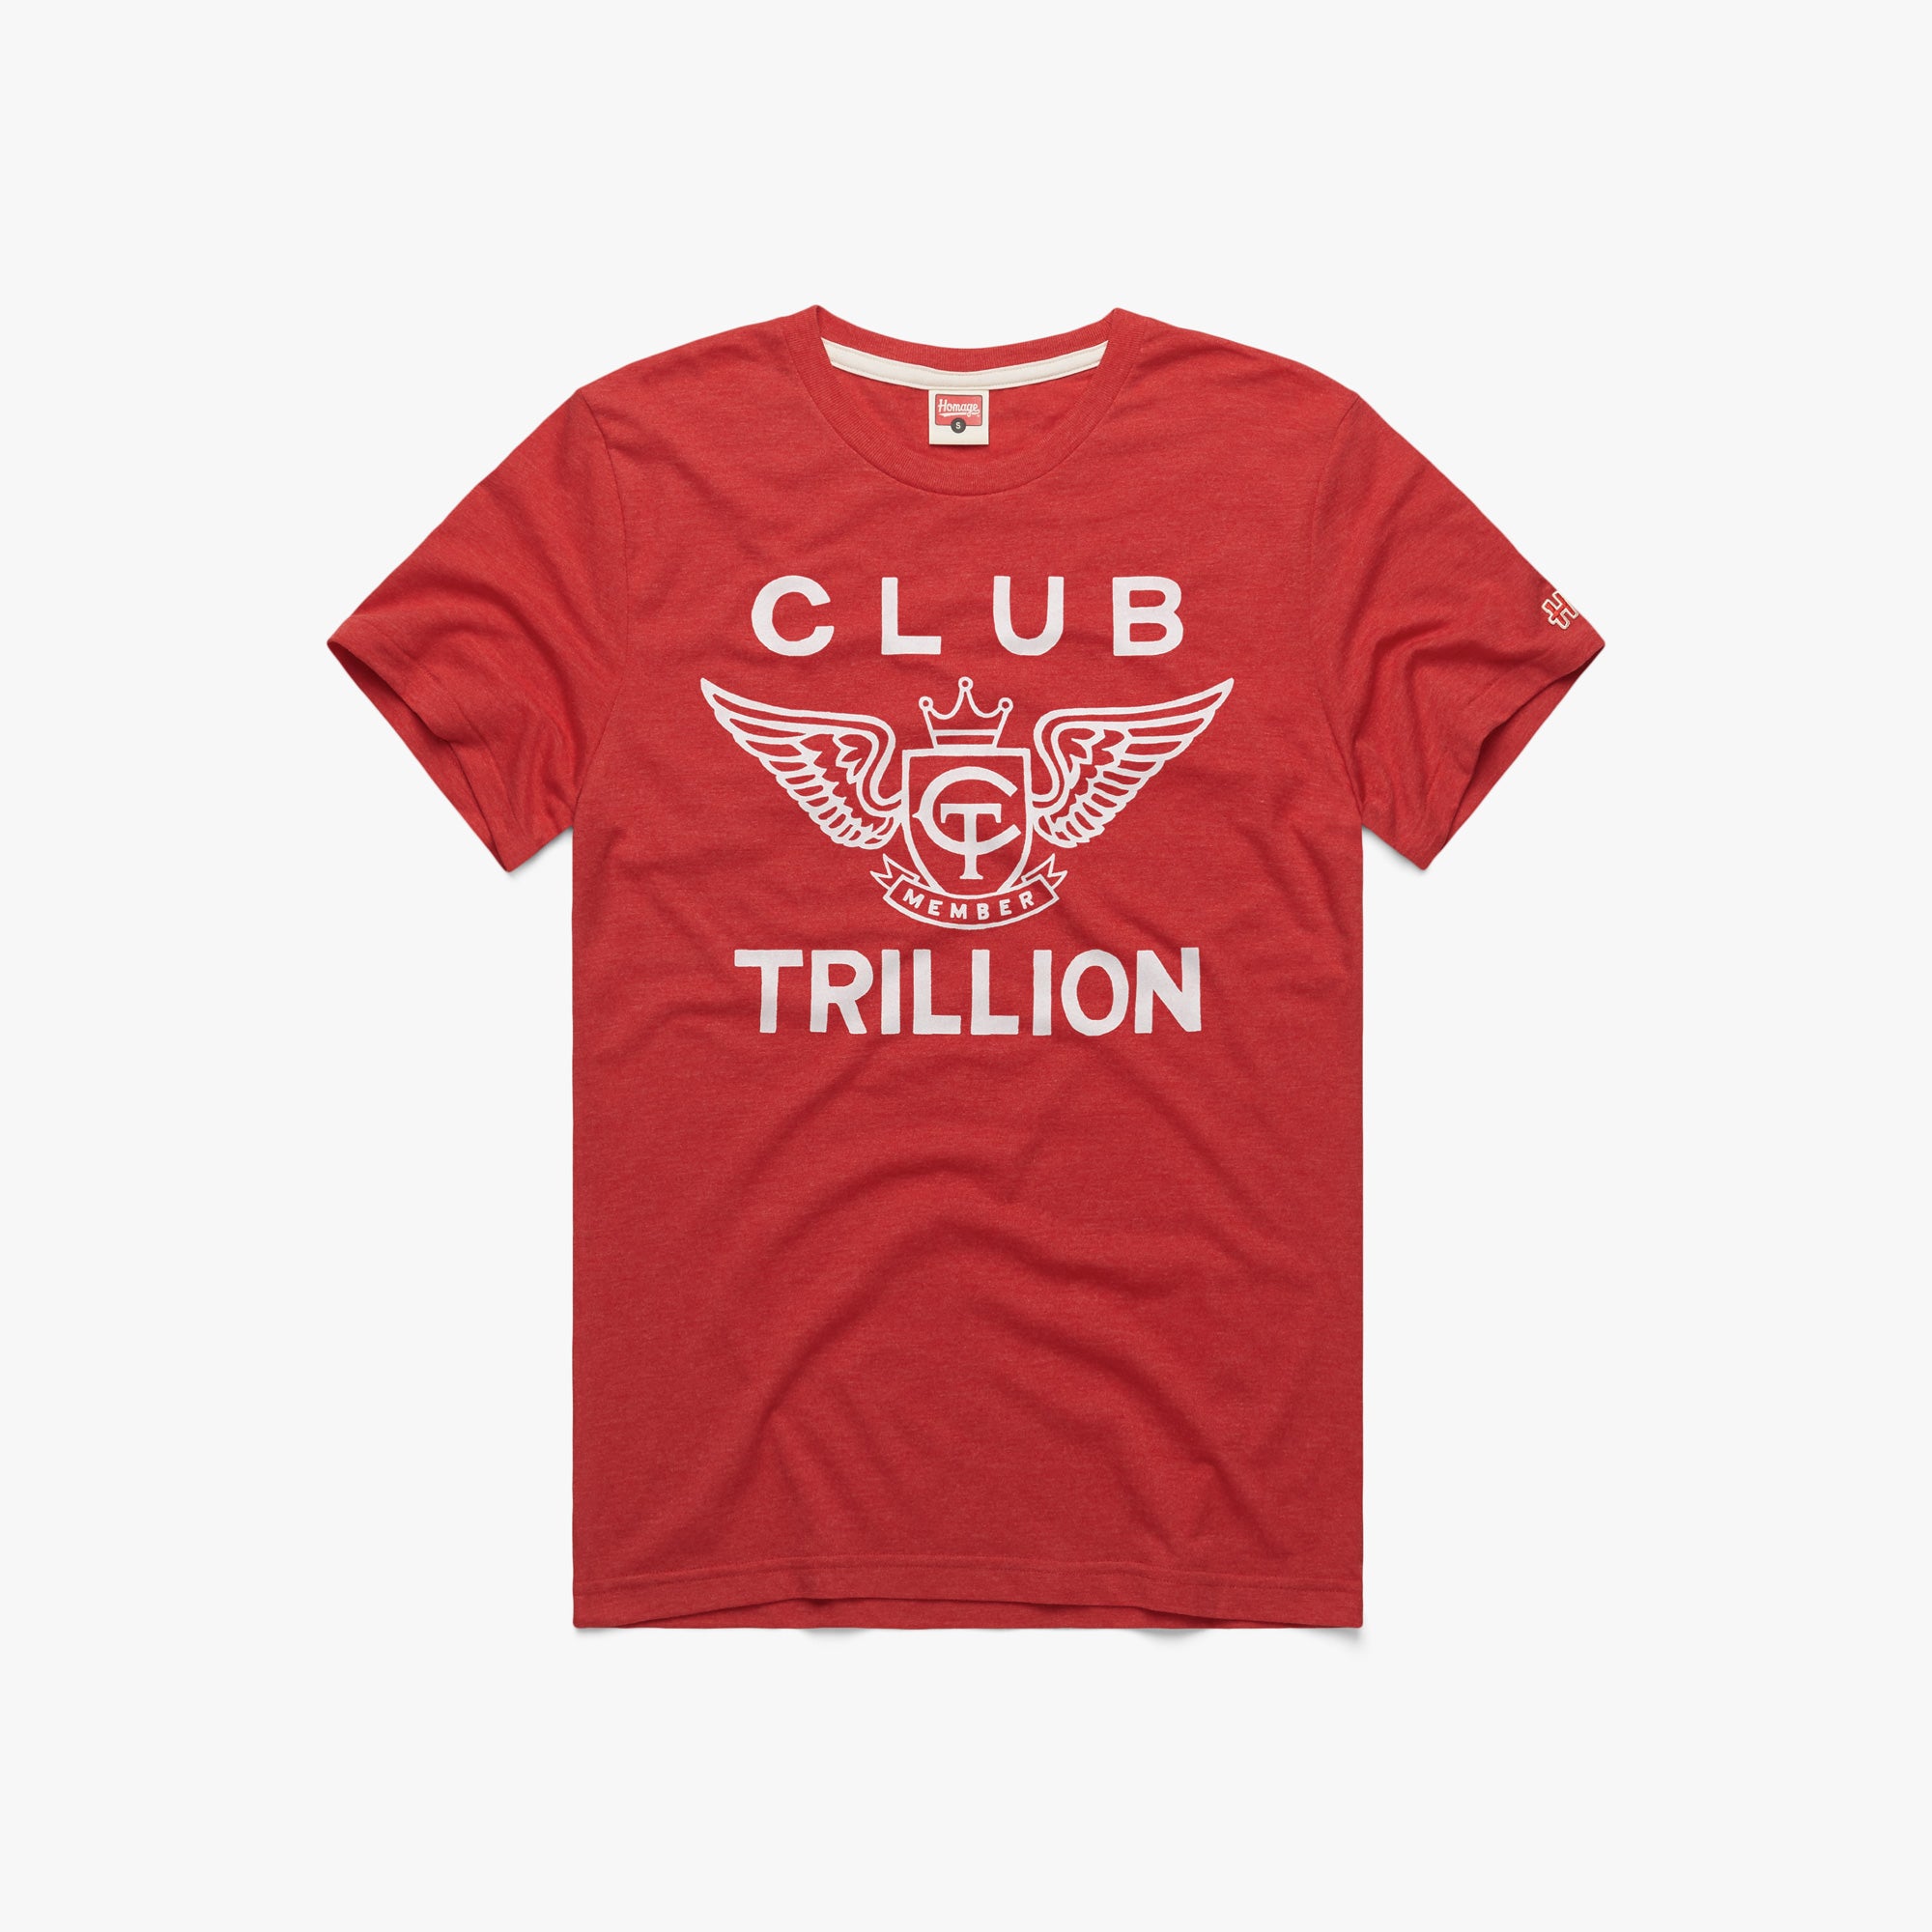 Club Trillion Member